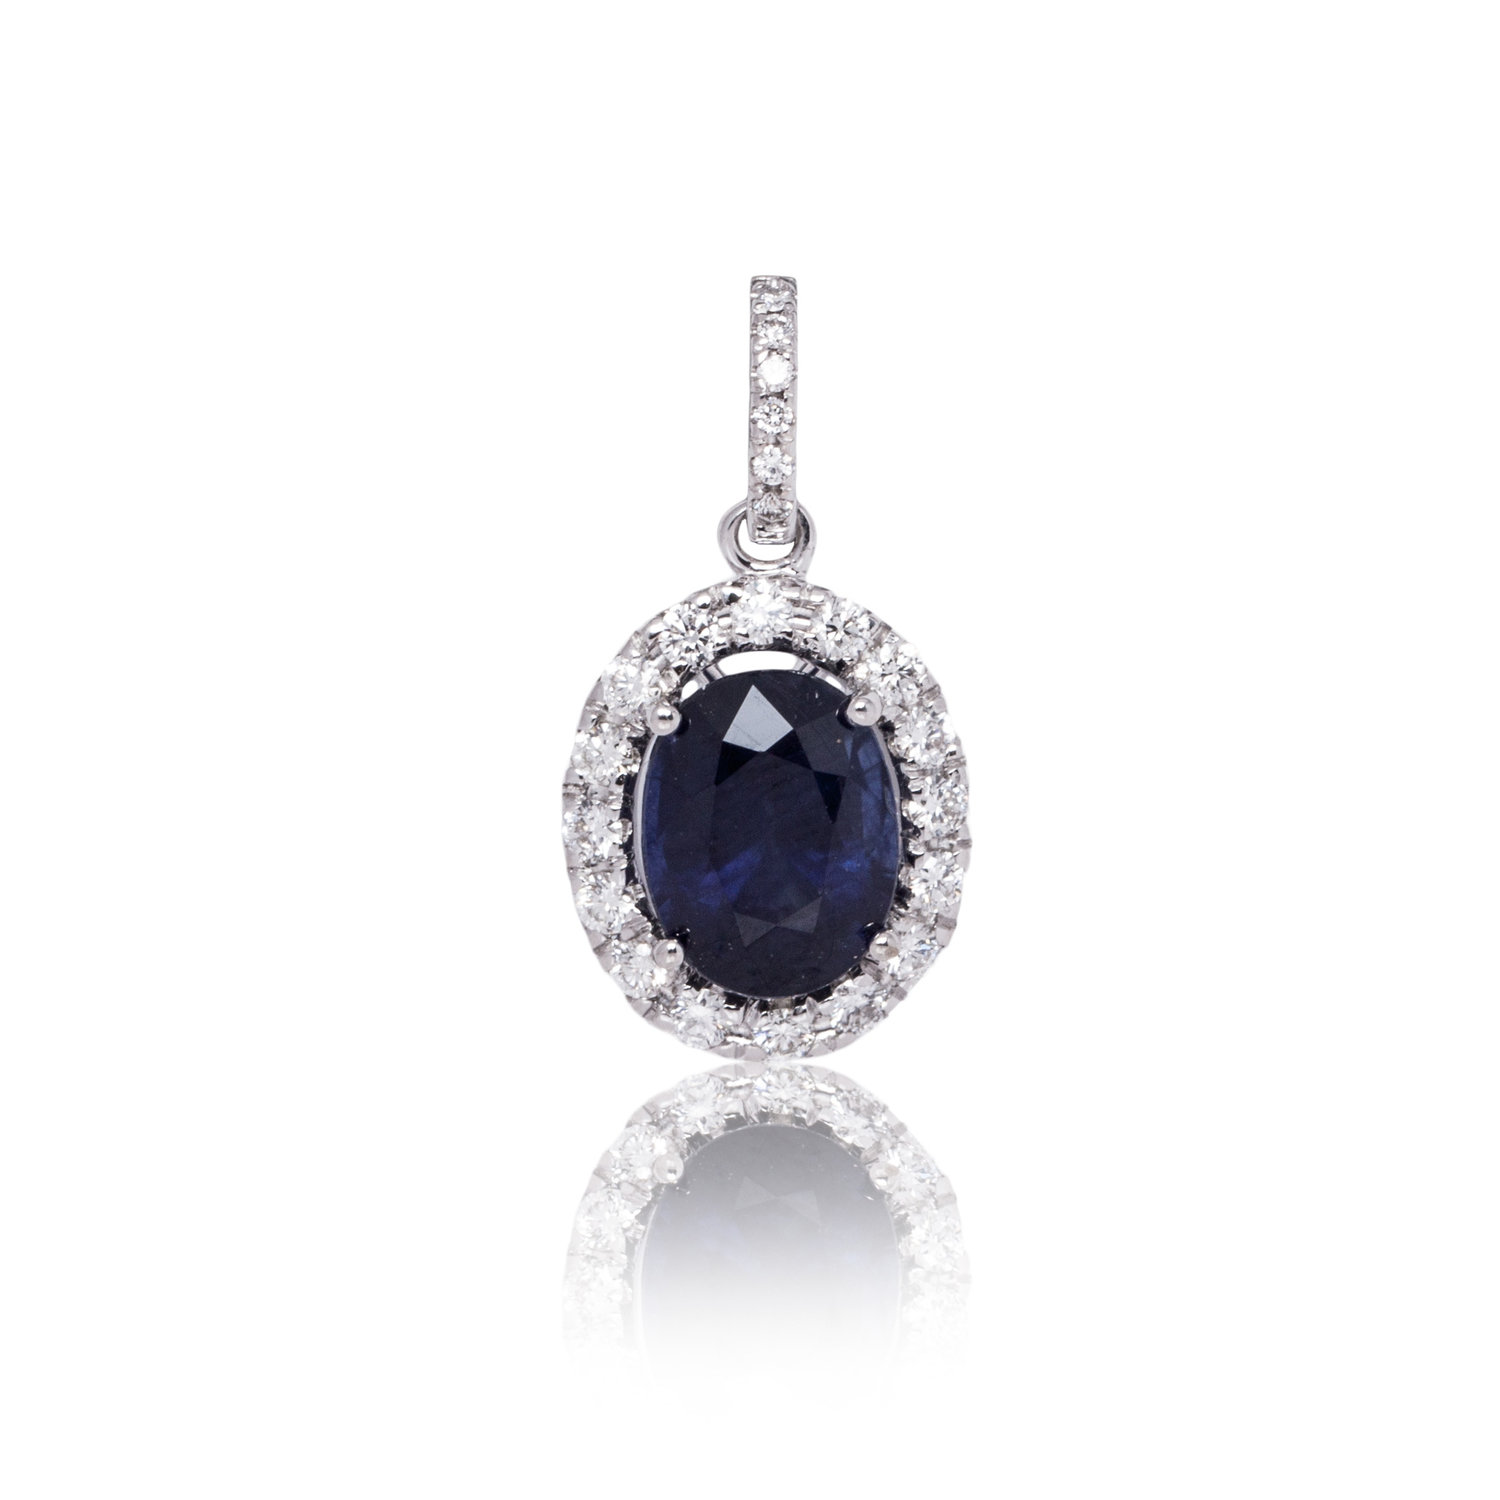 102-continental-jewels-manufacturers-pendant-cjp000102-18k-white-gold-vvs1-diamonds-blue-sapphire-oval-pendant.jpg